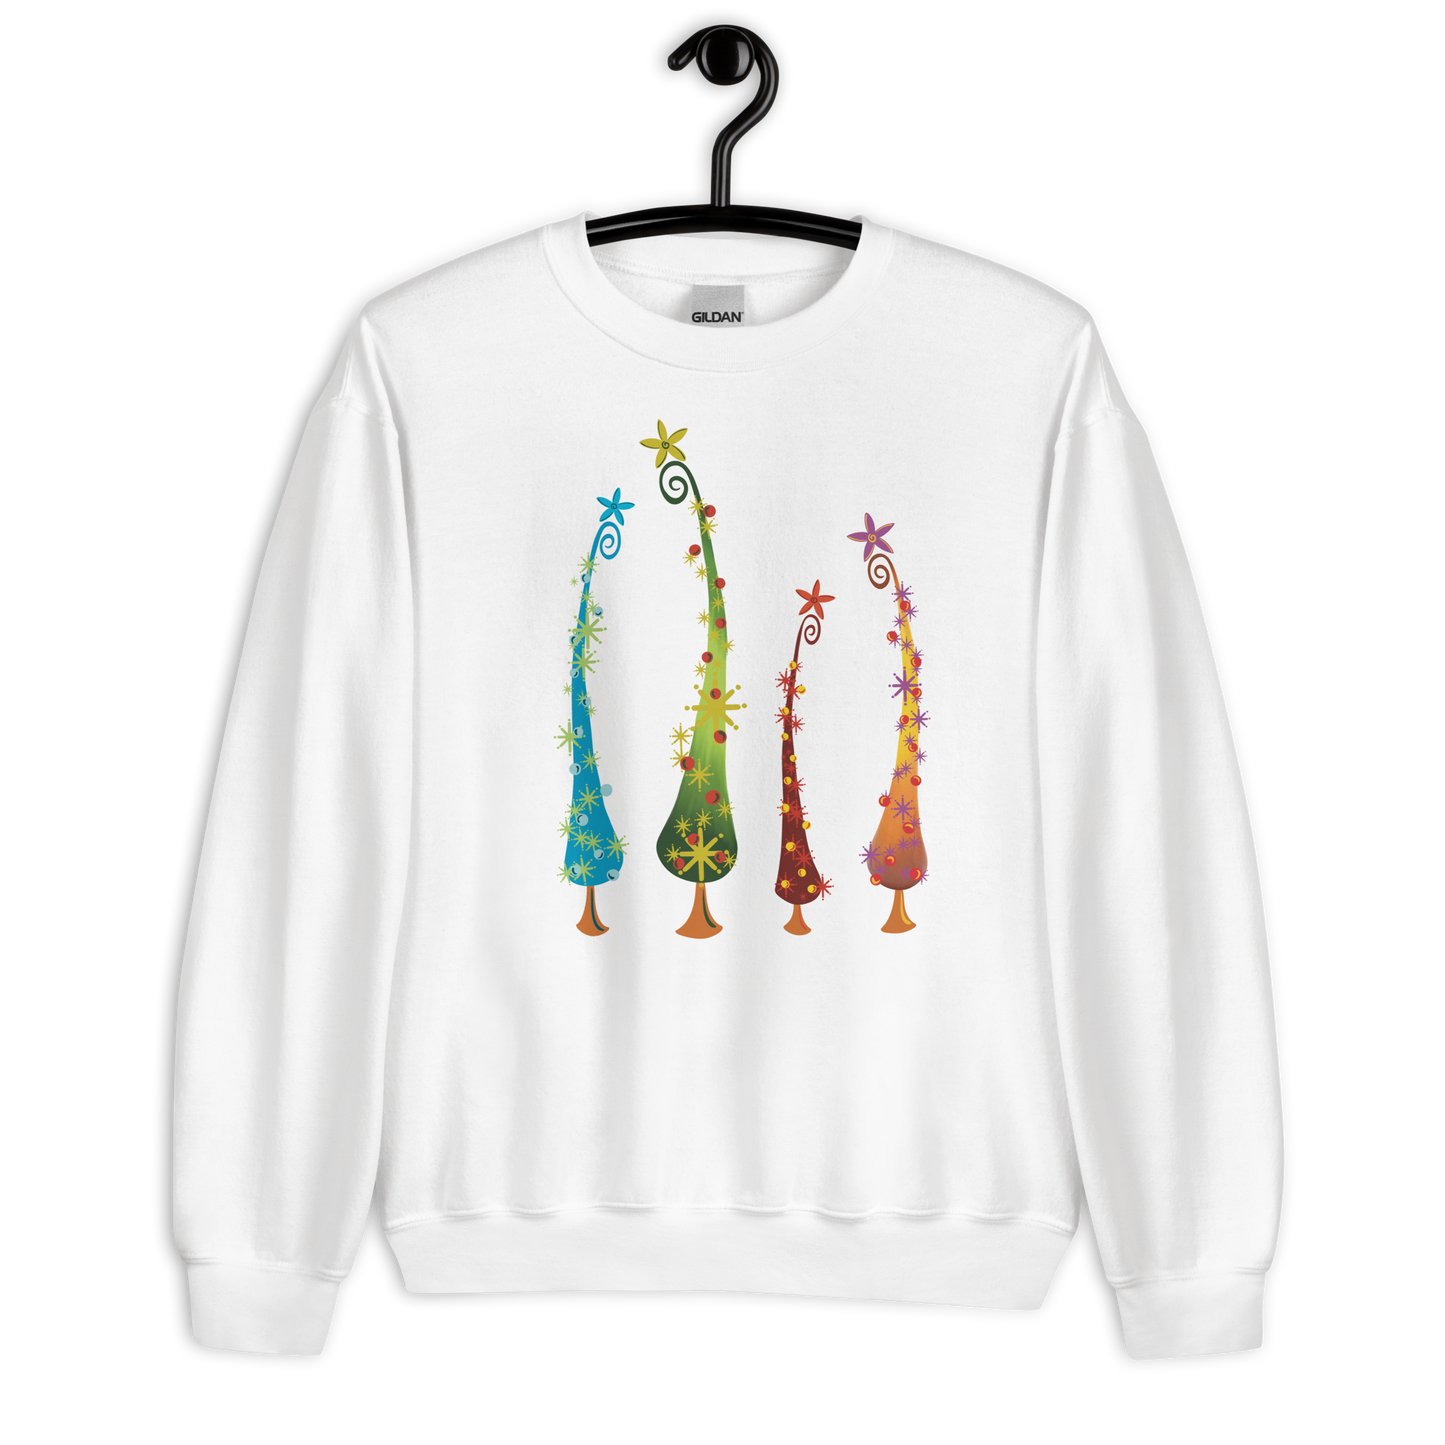 Unisex Christmas Sweater: The Magic of Christmas Trees